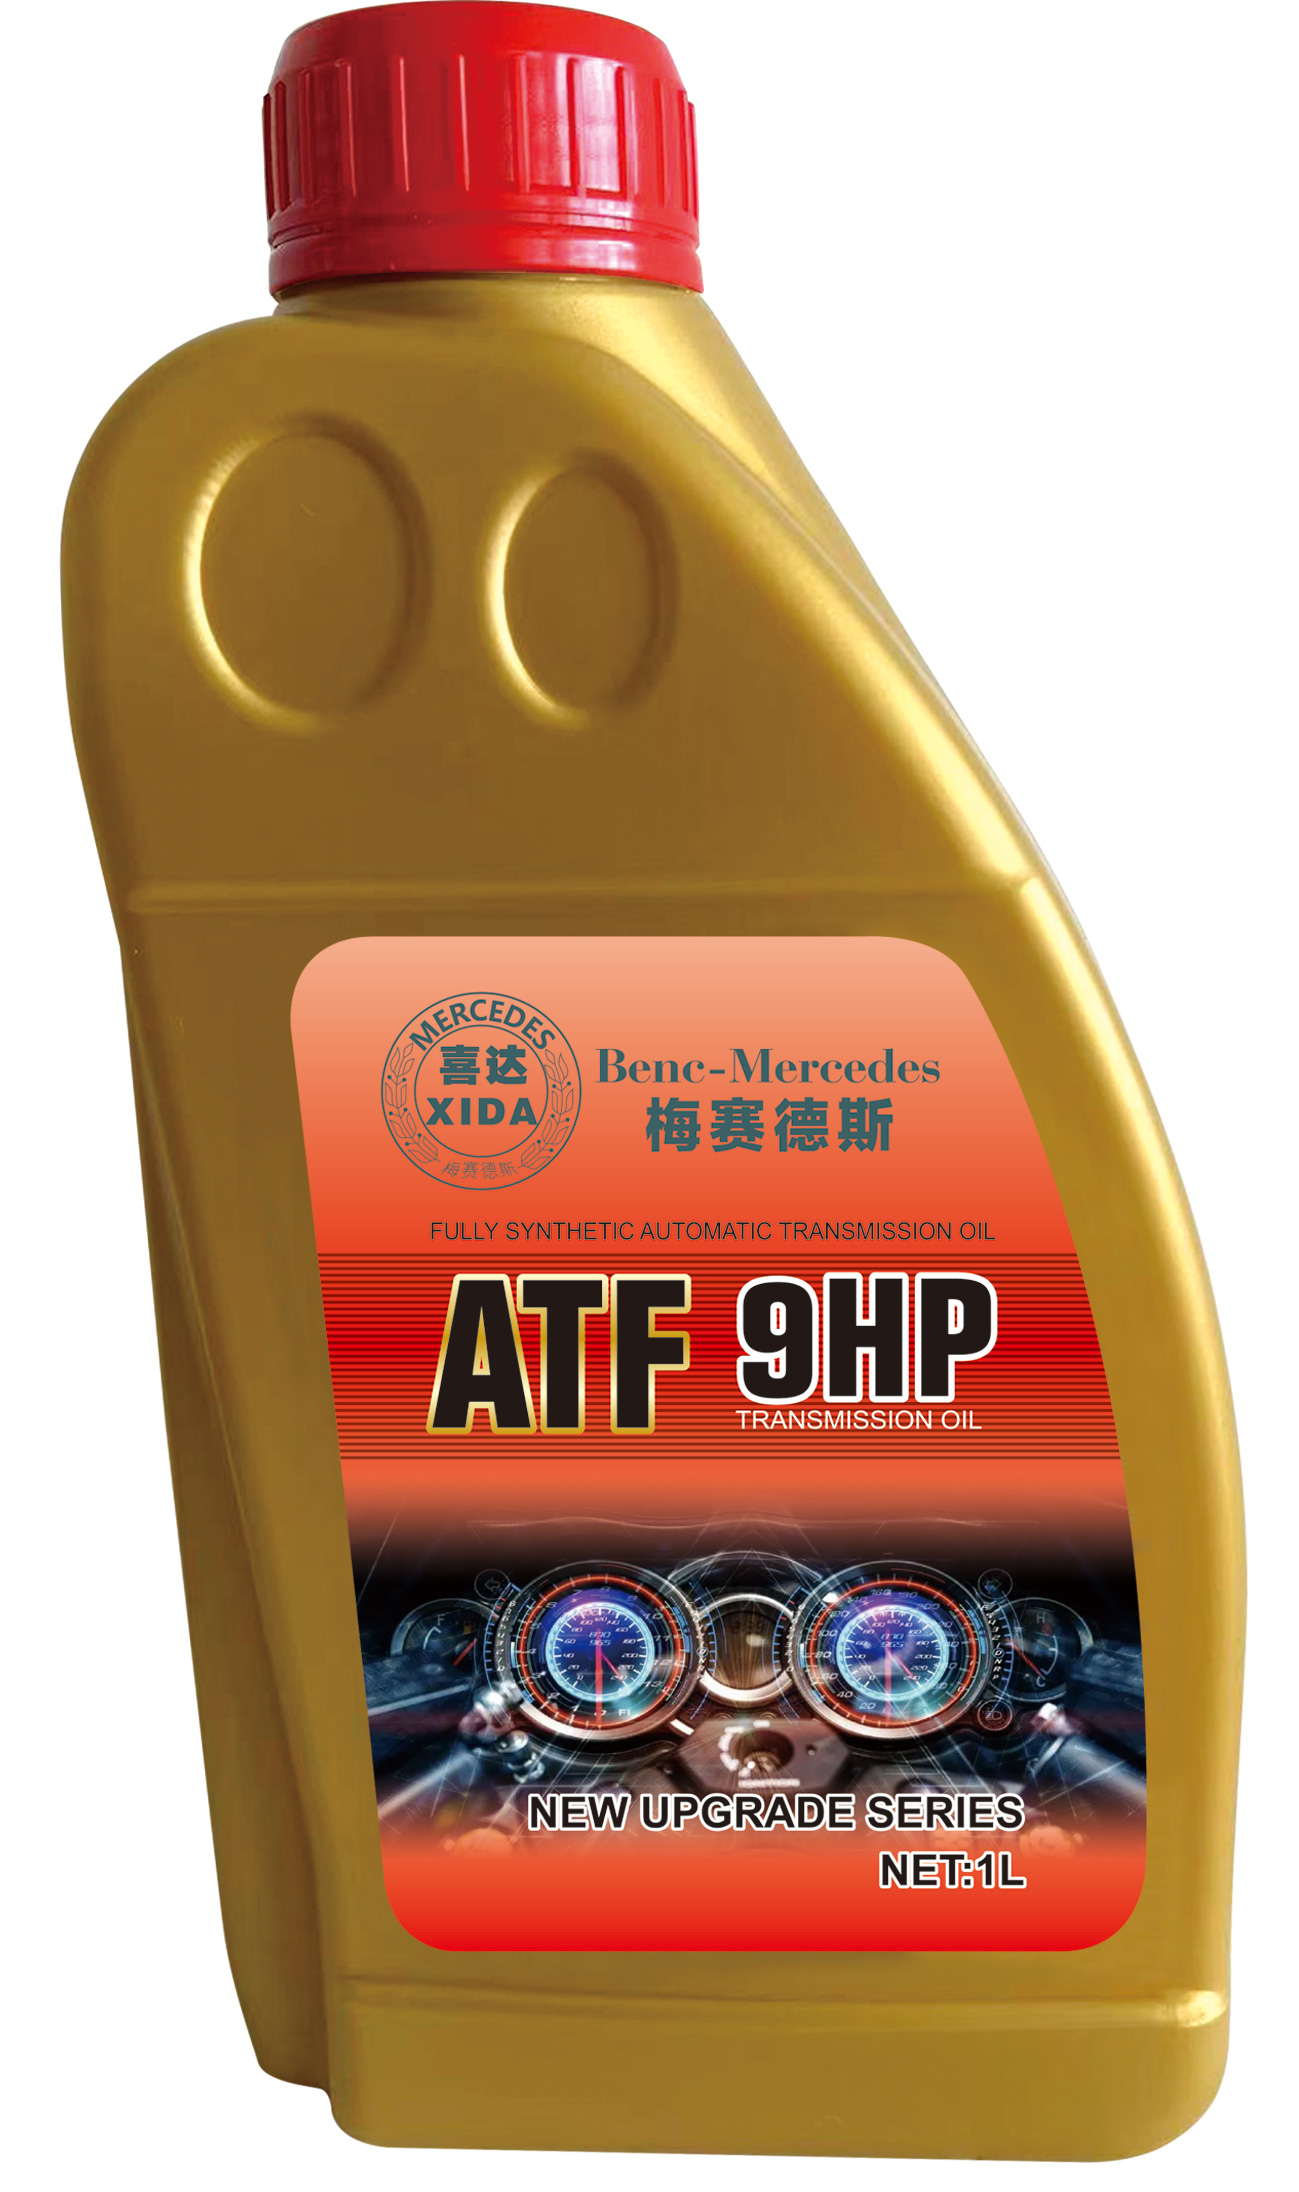 ATF-9HP